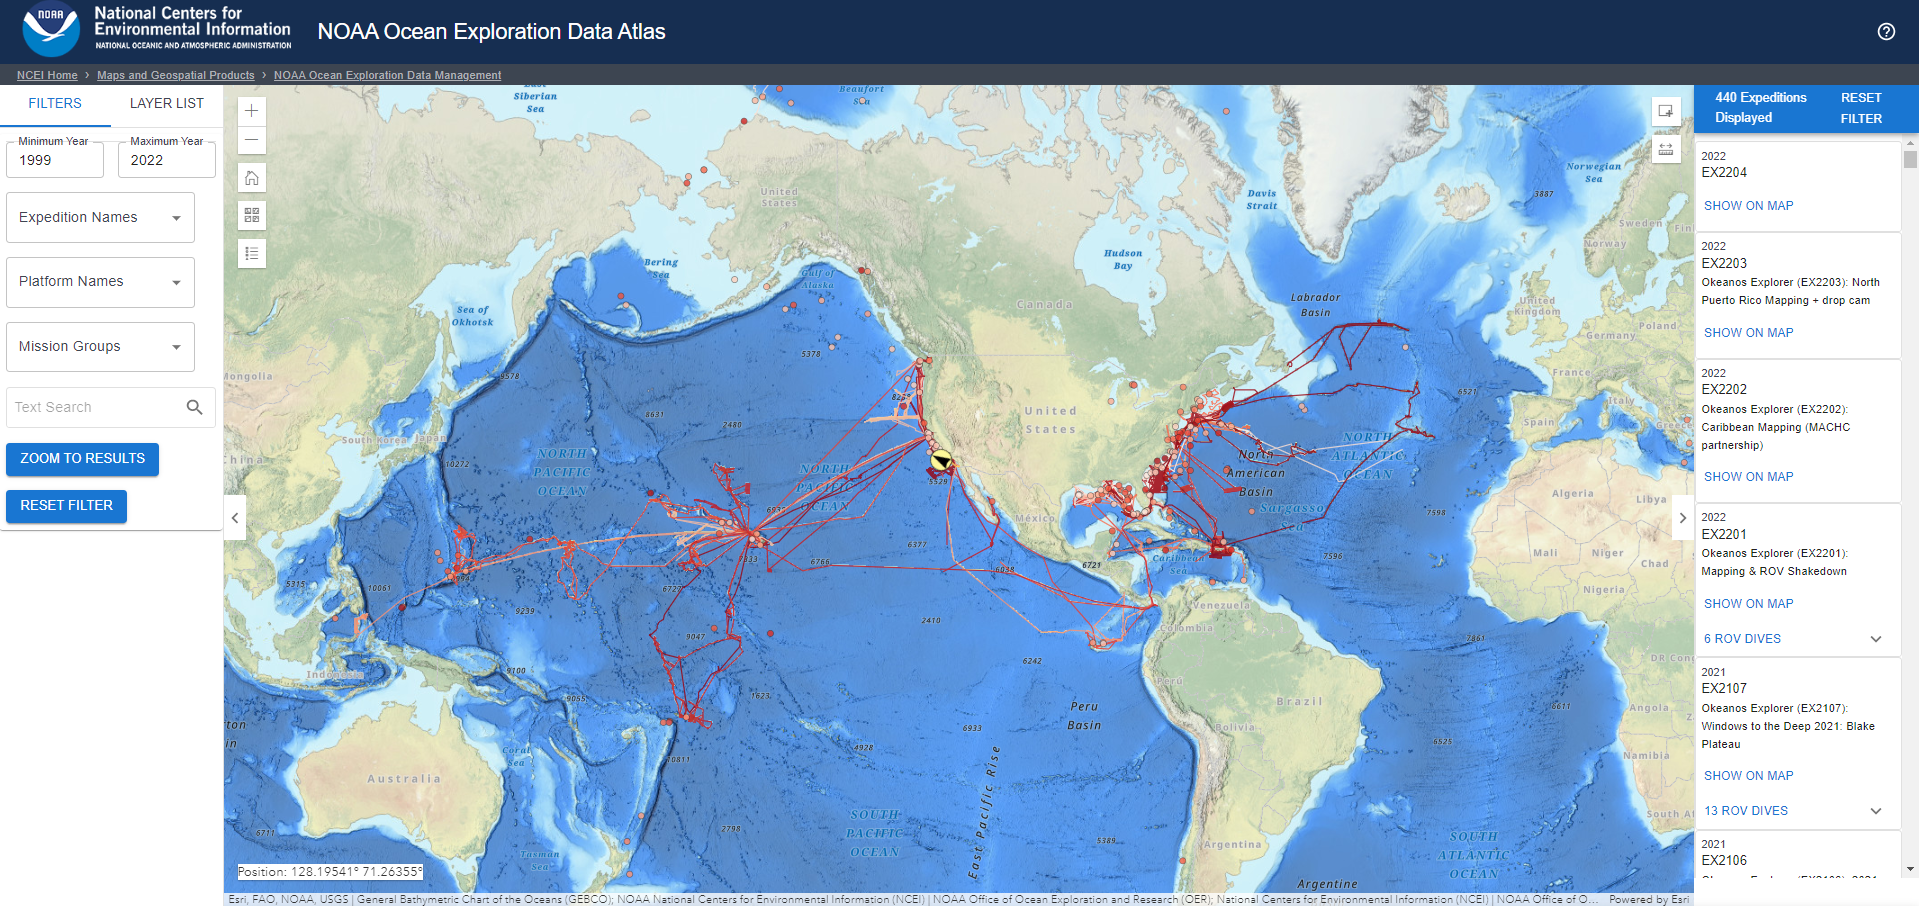 A screenshot of the NOAA Ocean Exploration Data Atlas.